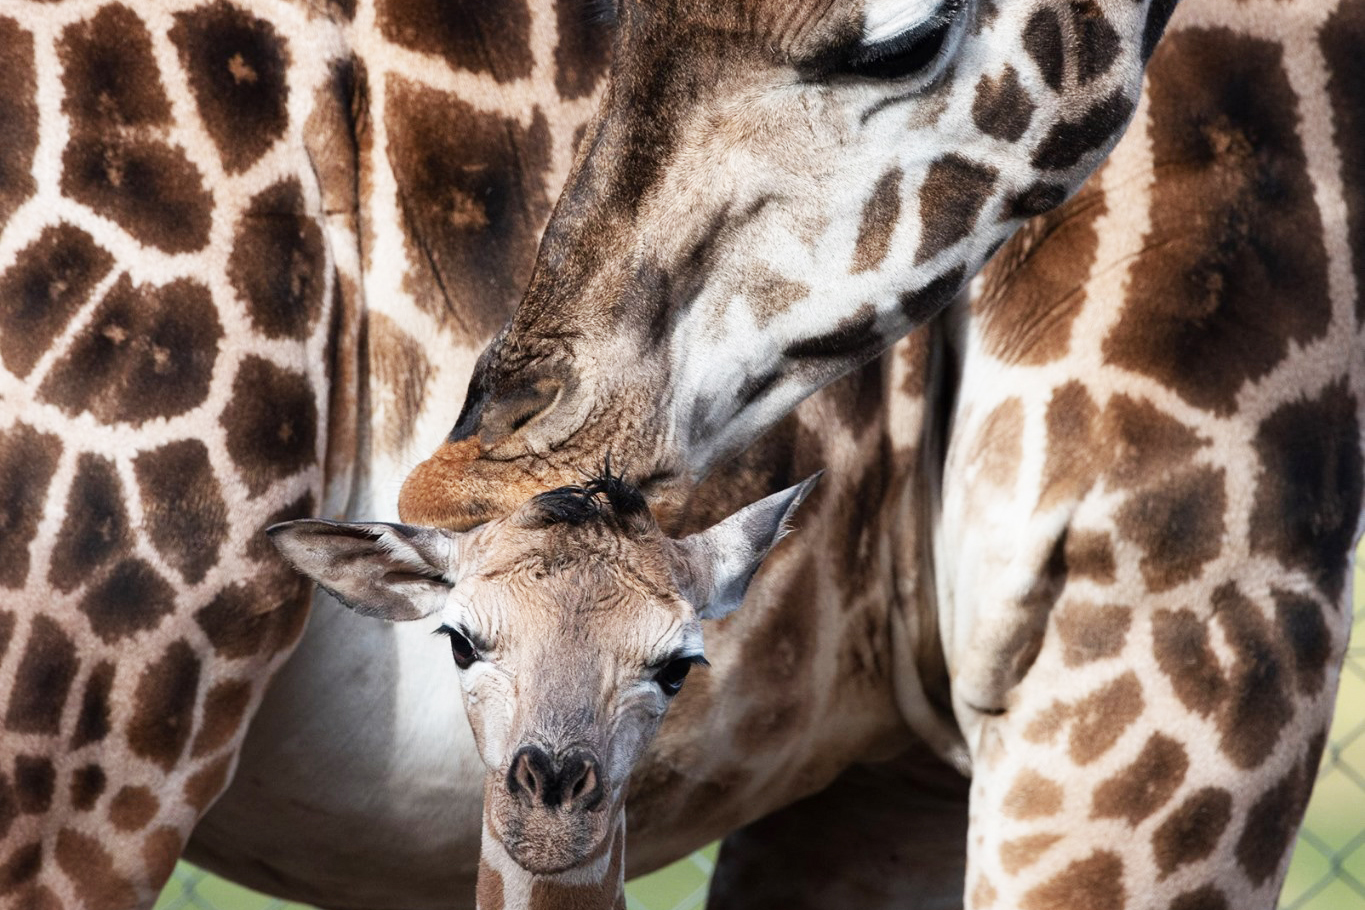 Baby Karn, another chapter in Mogo's 20 year giraffe breeding story